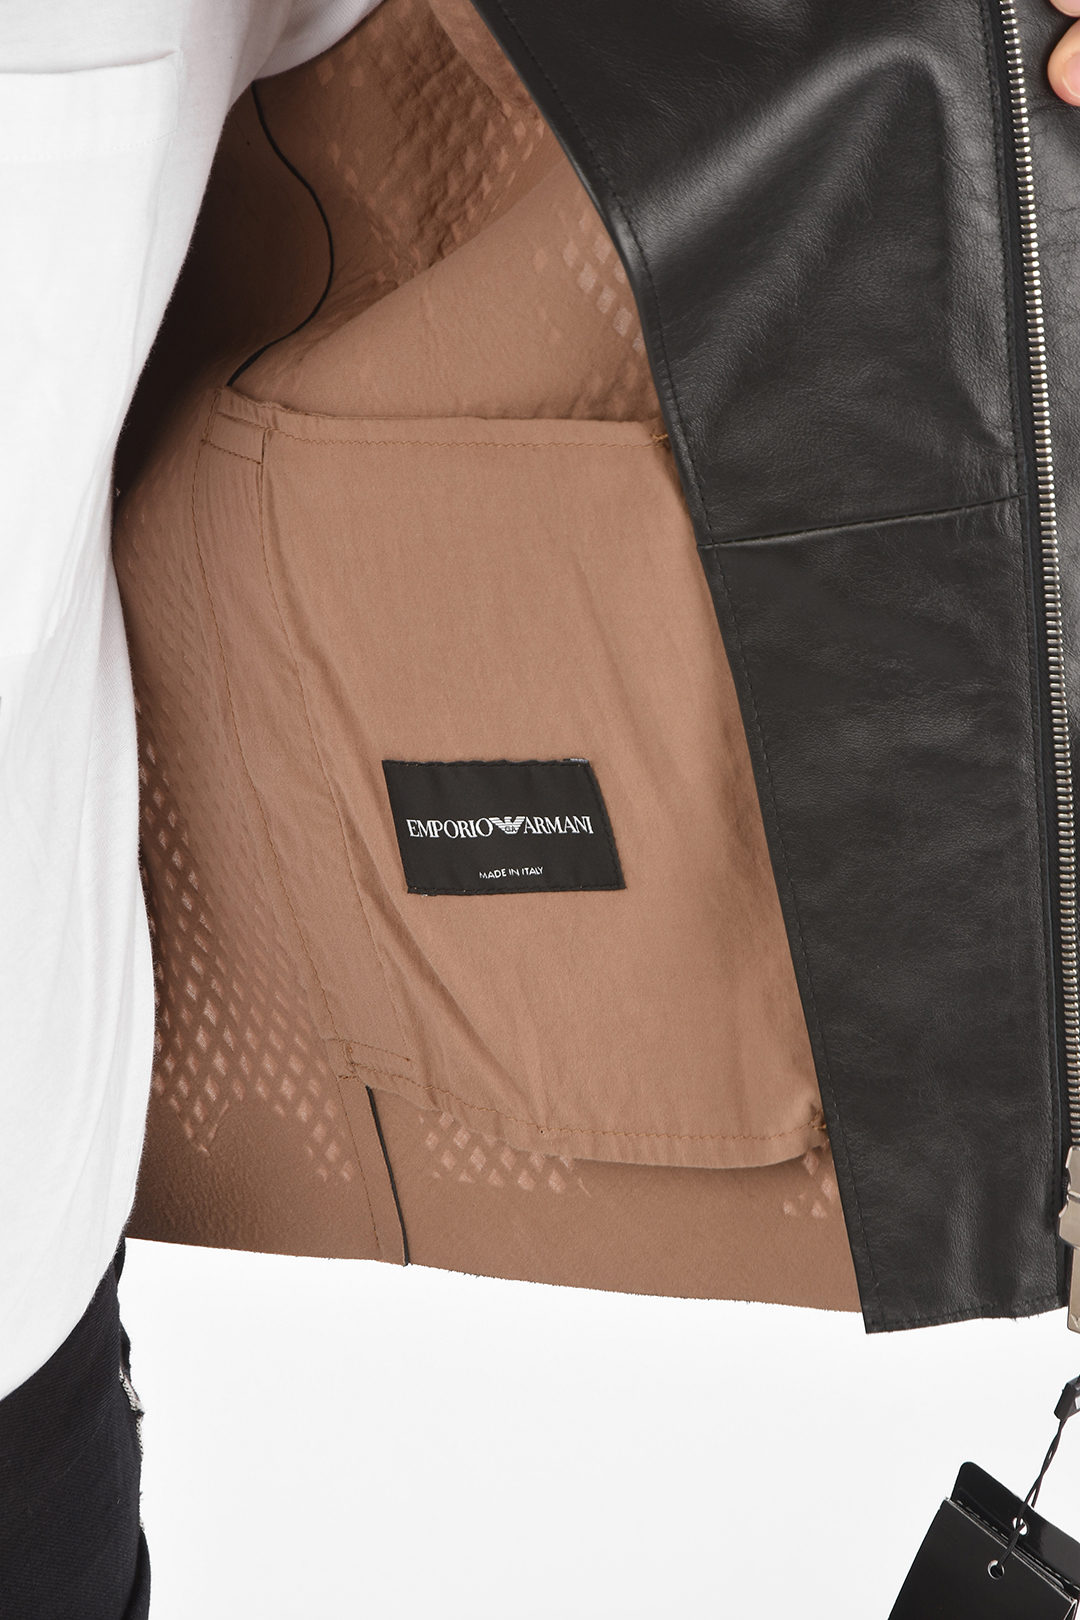 Armani EMPORIO ARMANI Leather Embroidered Jacket men - Glamood Outlet